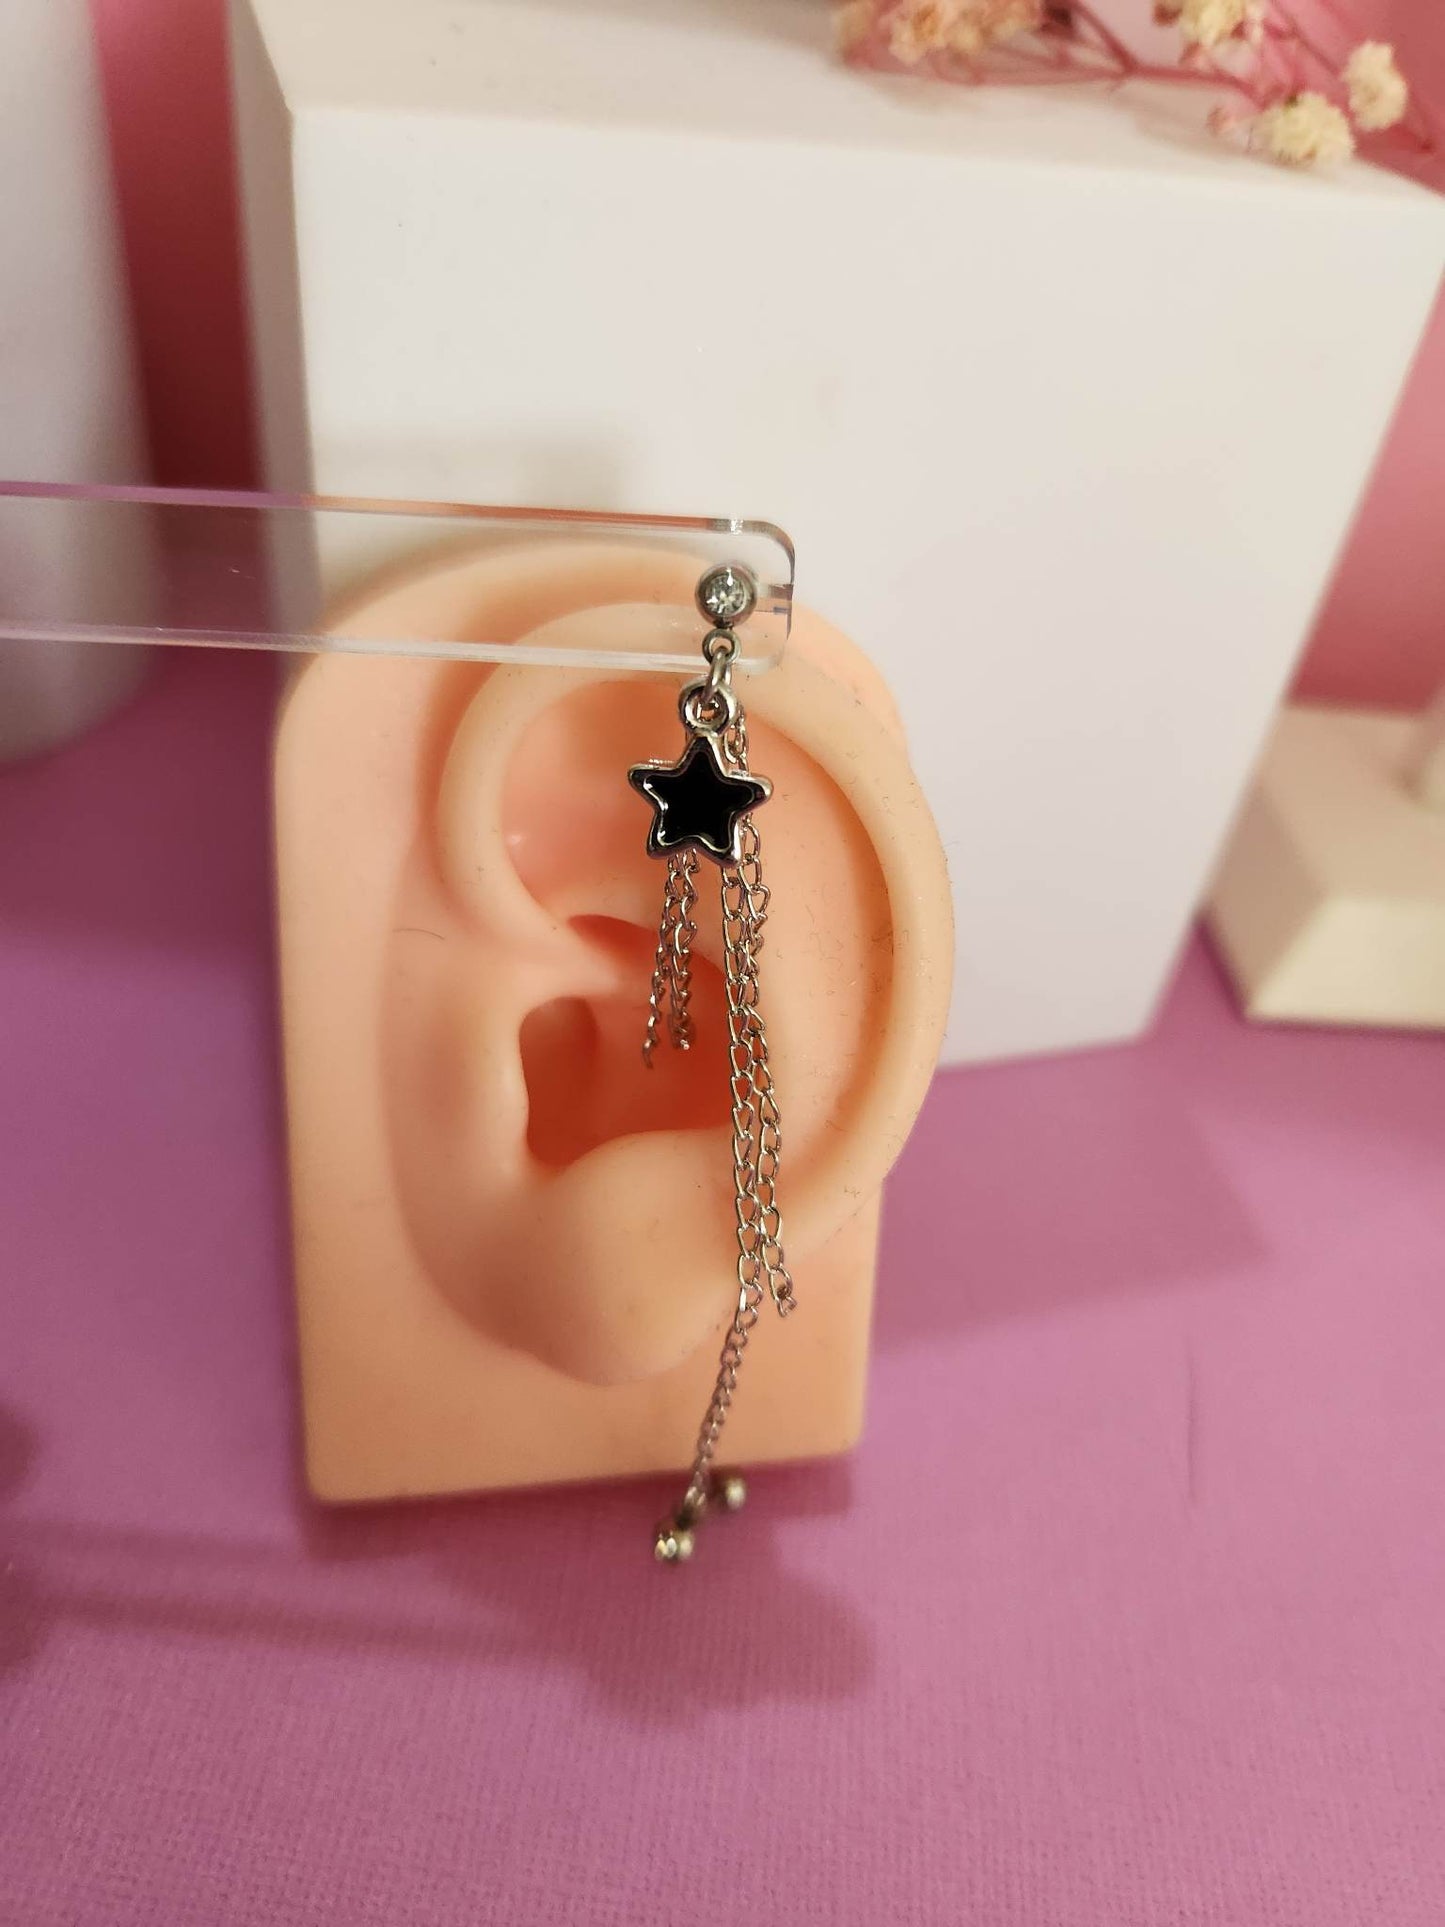 Double Gem Dangle Chain Star Tragus Cartilage Ear Piercing Bars 16g 6mm - Pierced n Proud